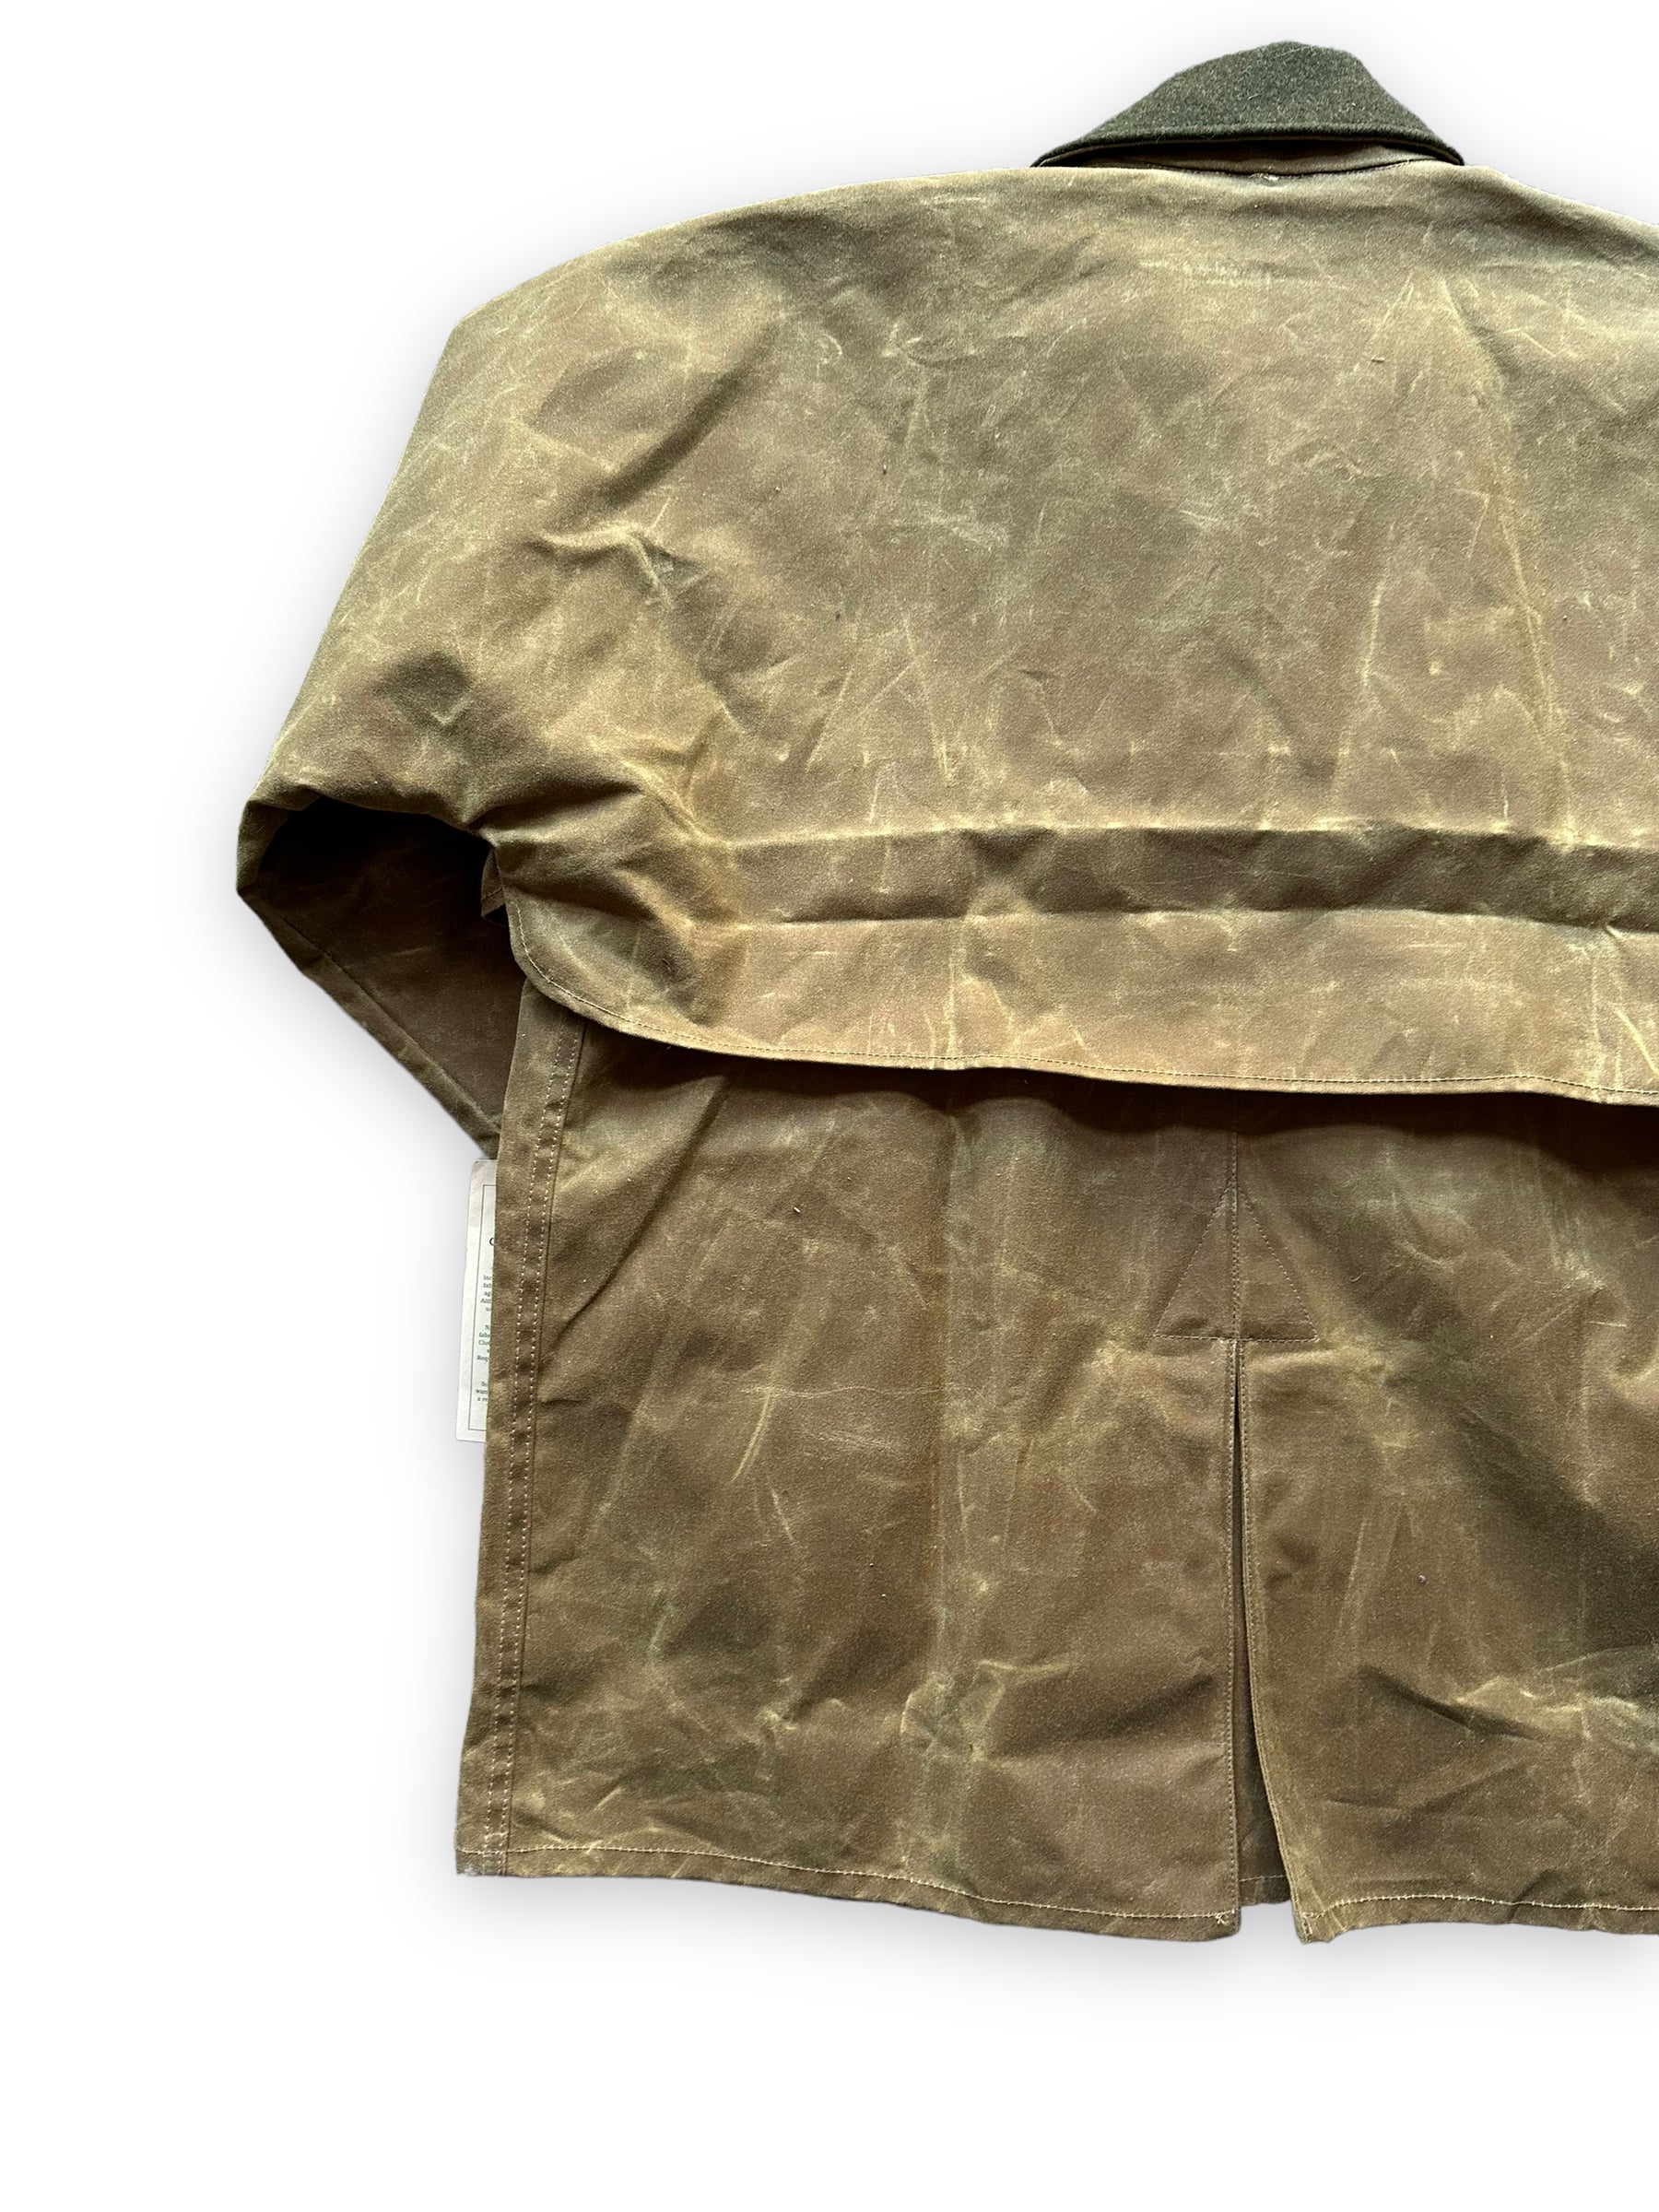 Rear Left View of NWT Filson Tin Packer Coat SZ XL |  Barn Owl Vintage Goods Filson | Vintage Filson Tin Cloth Workwear Seattle